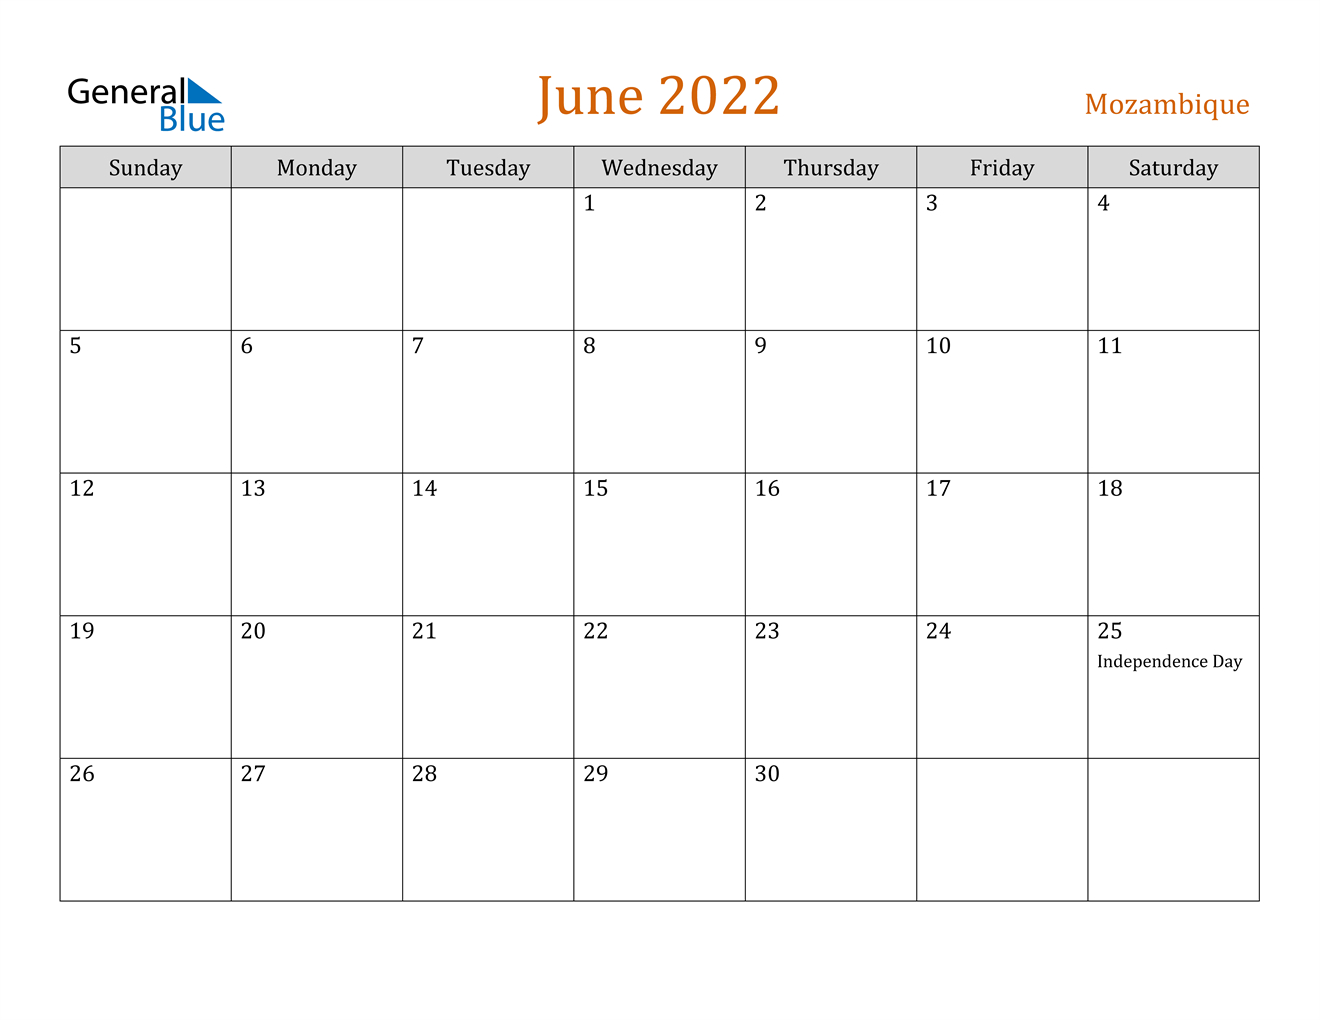 June 2022 Calendar - Mozambique